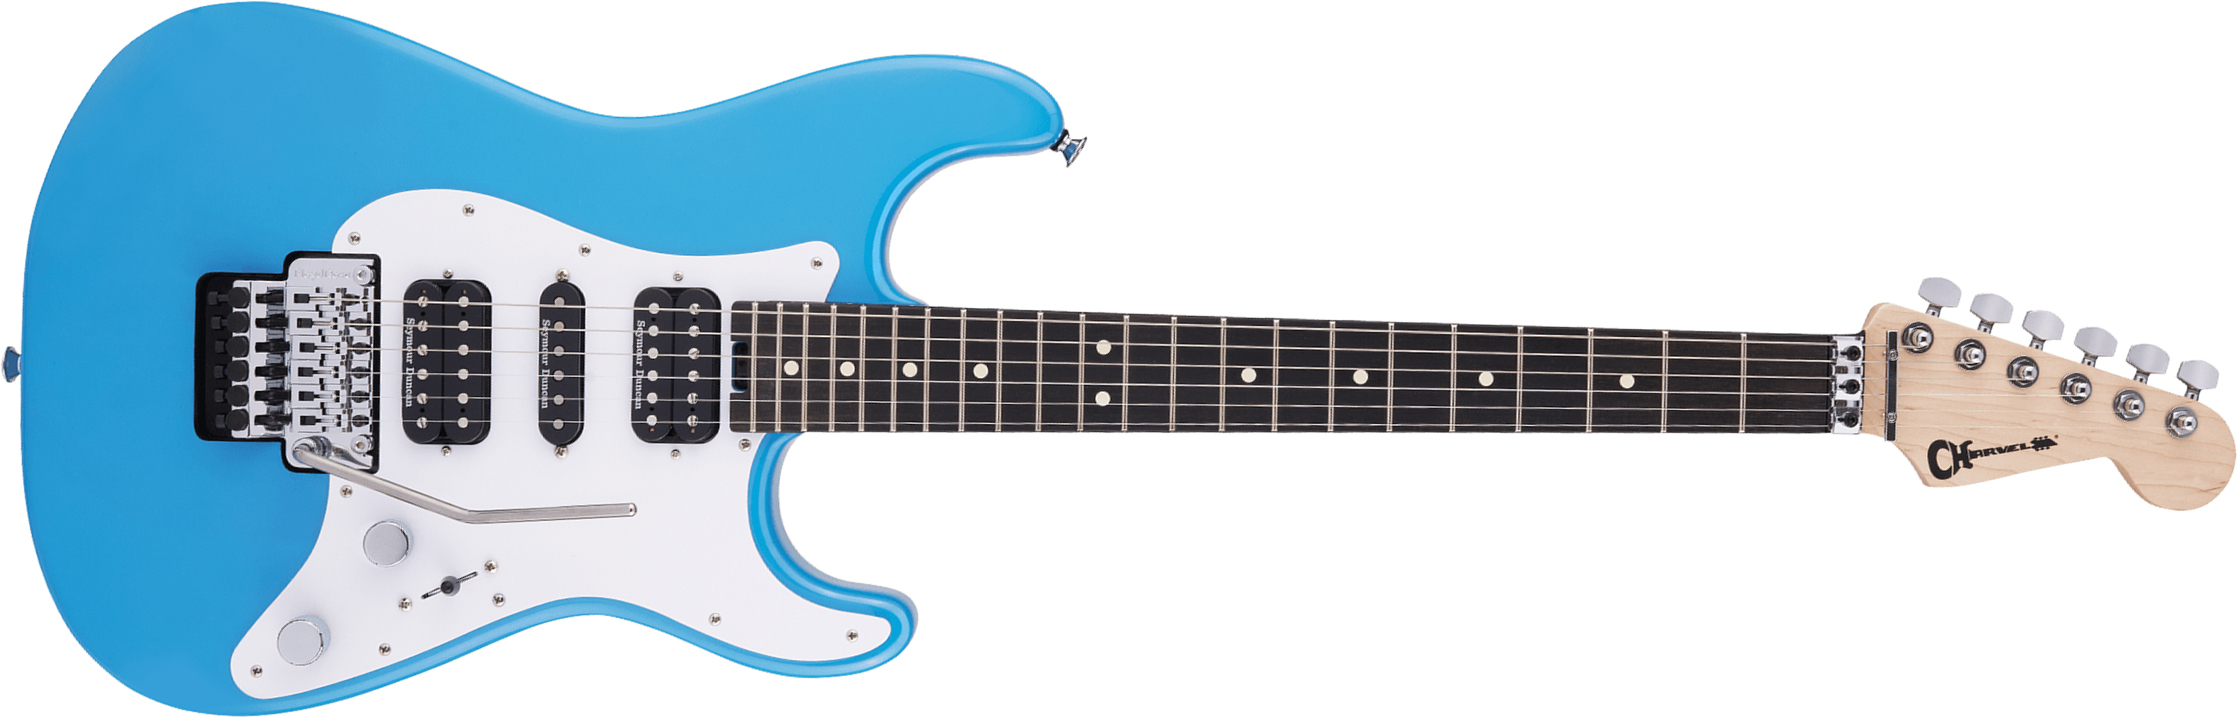 Charvel So-cal Style 1 Hsh Fr E Pro-mod Seymour Duncan Eb - Robbin's Egg Blue - Str shape electric guitar - Main picture